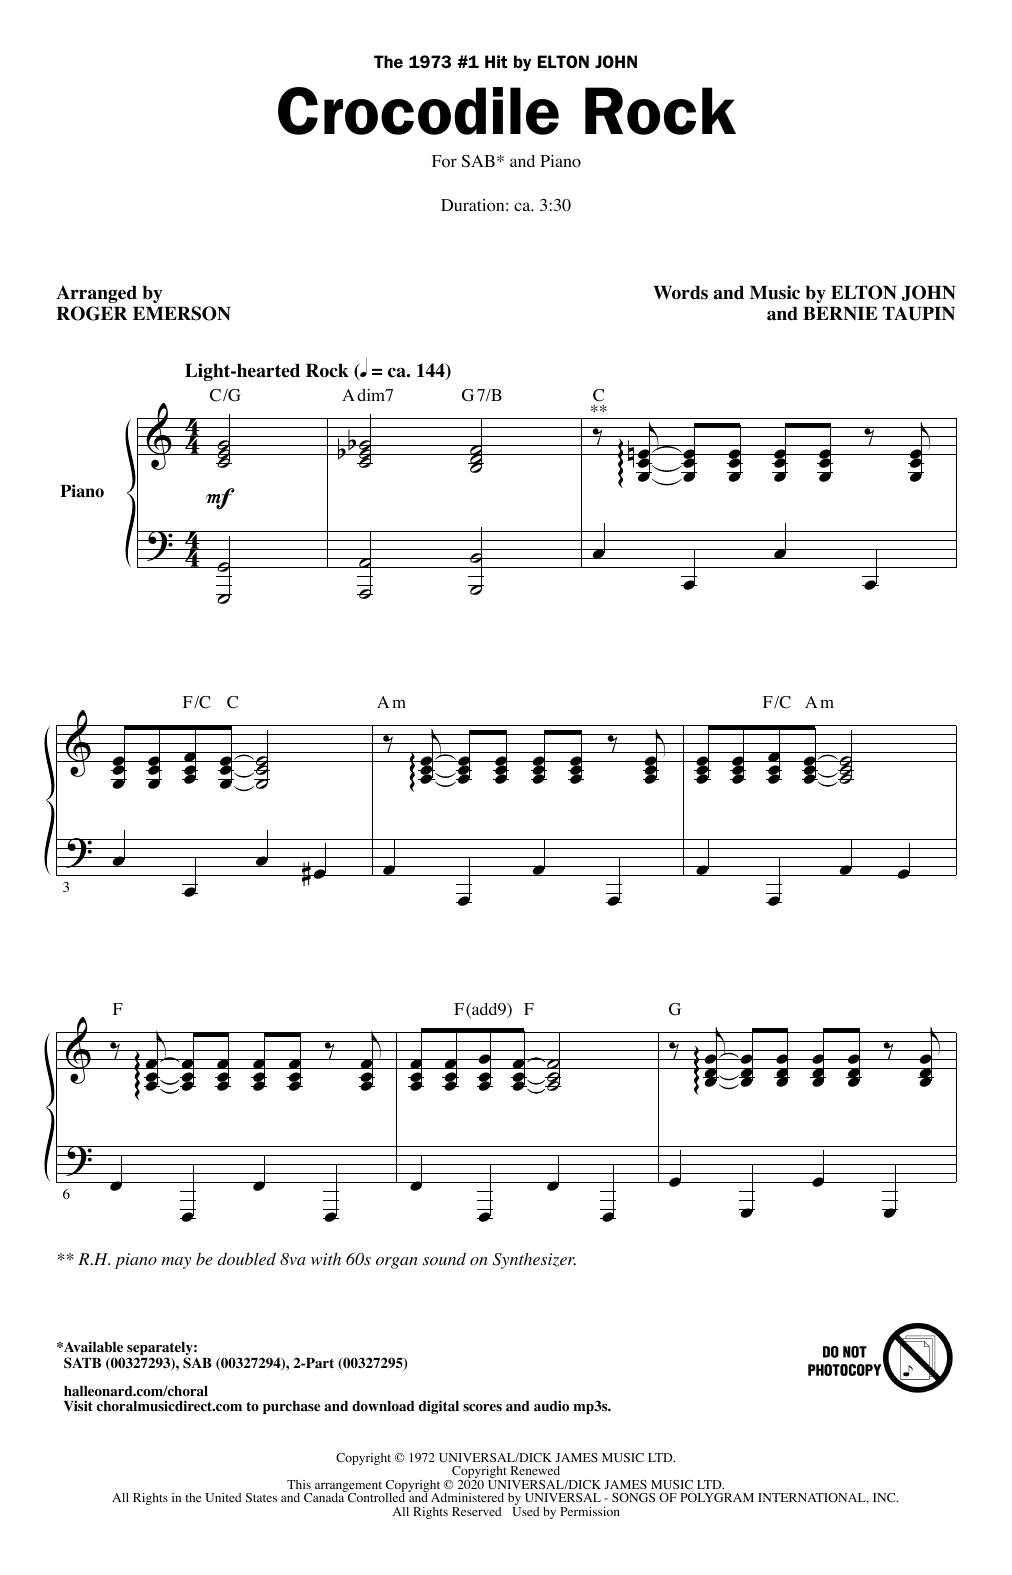 Elton John Crocodile Rock (arr. Roger Emerson) Sheet Music Notes & Chords for SATB Choir - Download or Print PDF